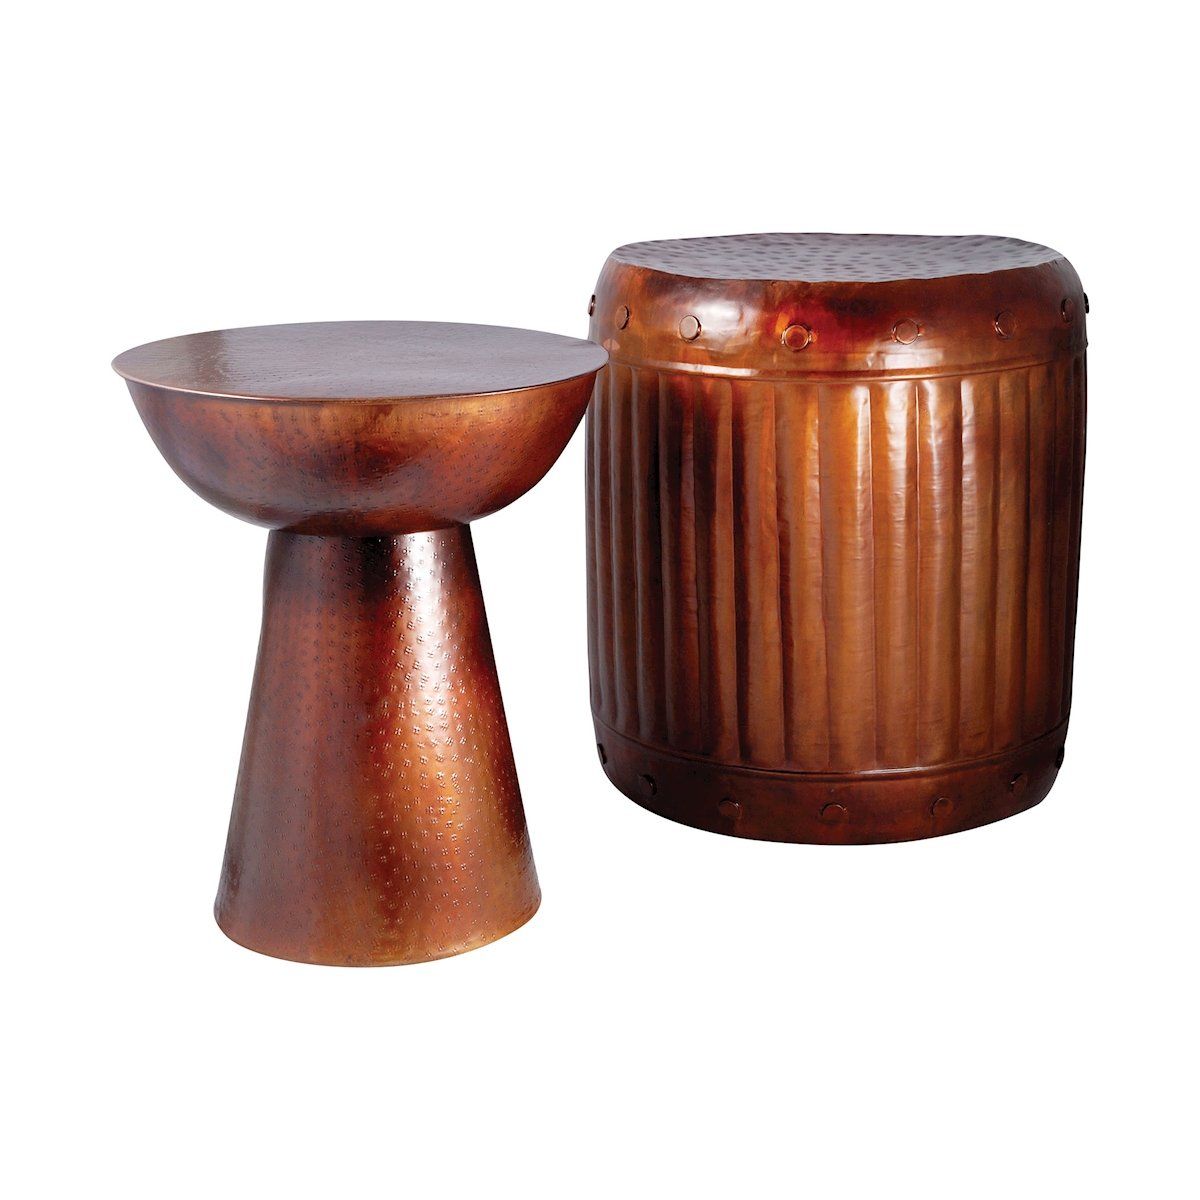 Set/ 2 Truffle Table/ Barrel Stool Furniture Pomeroy 